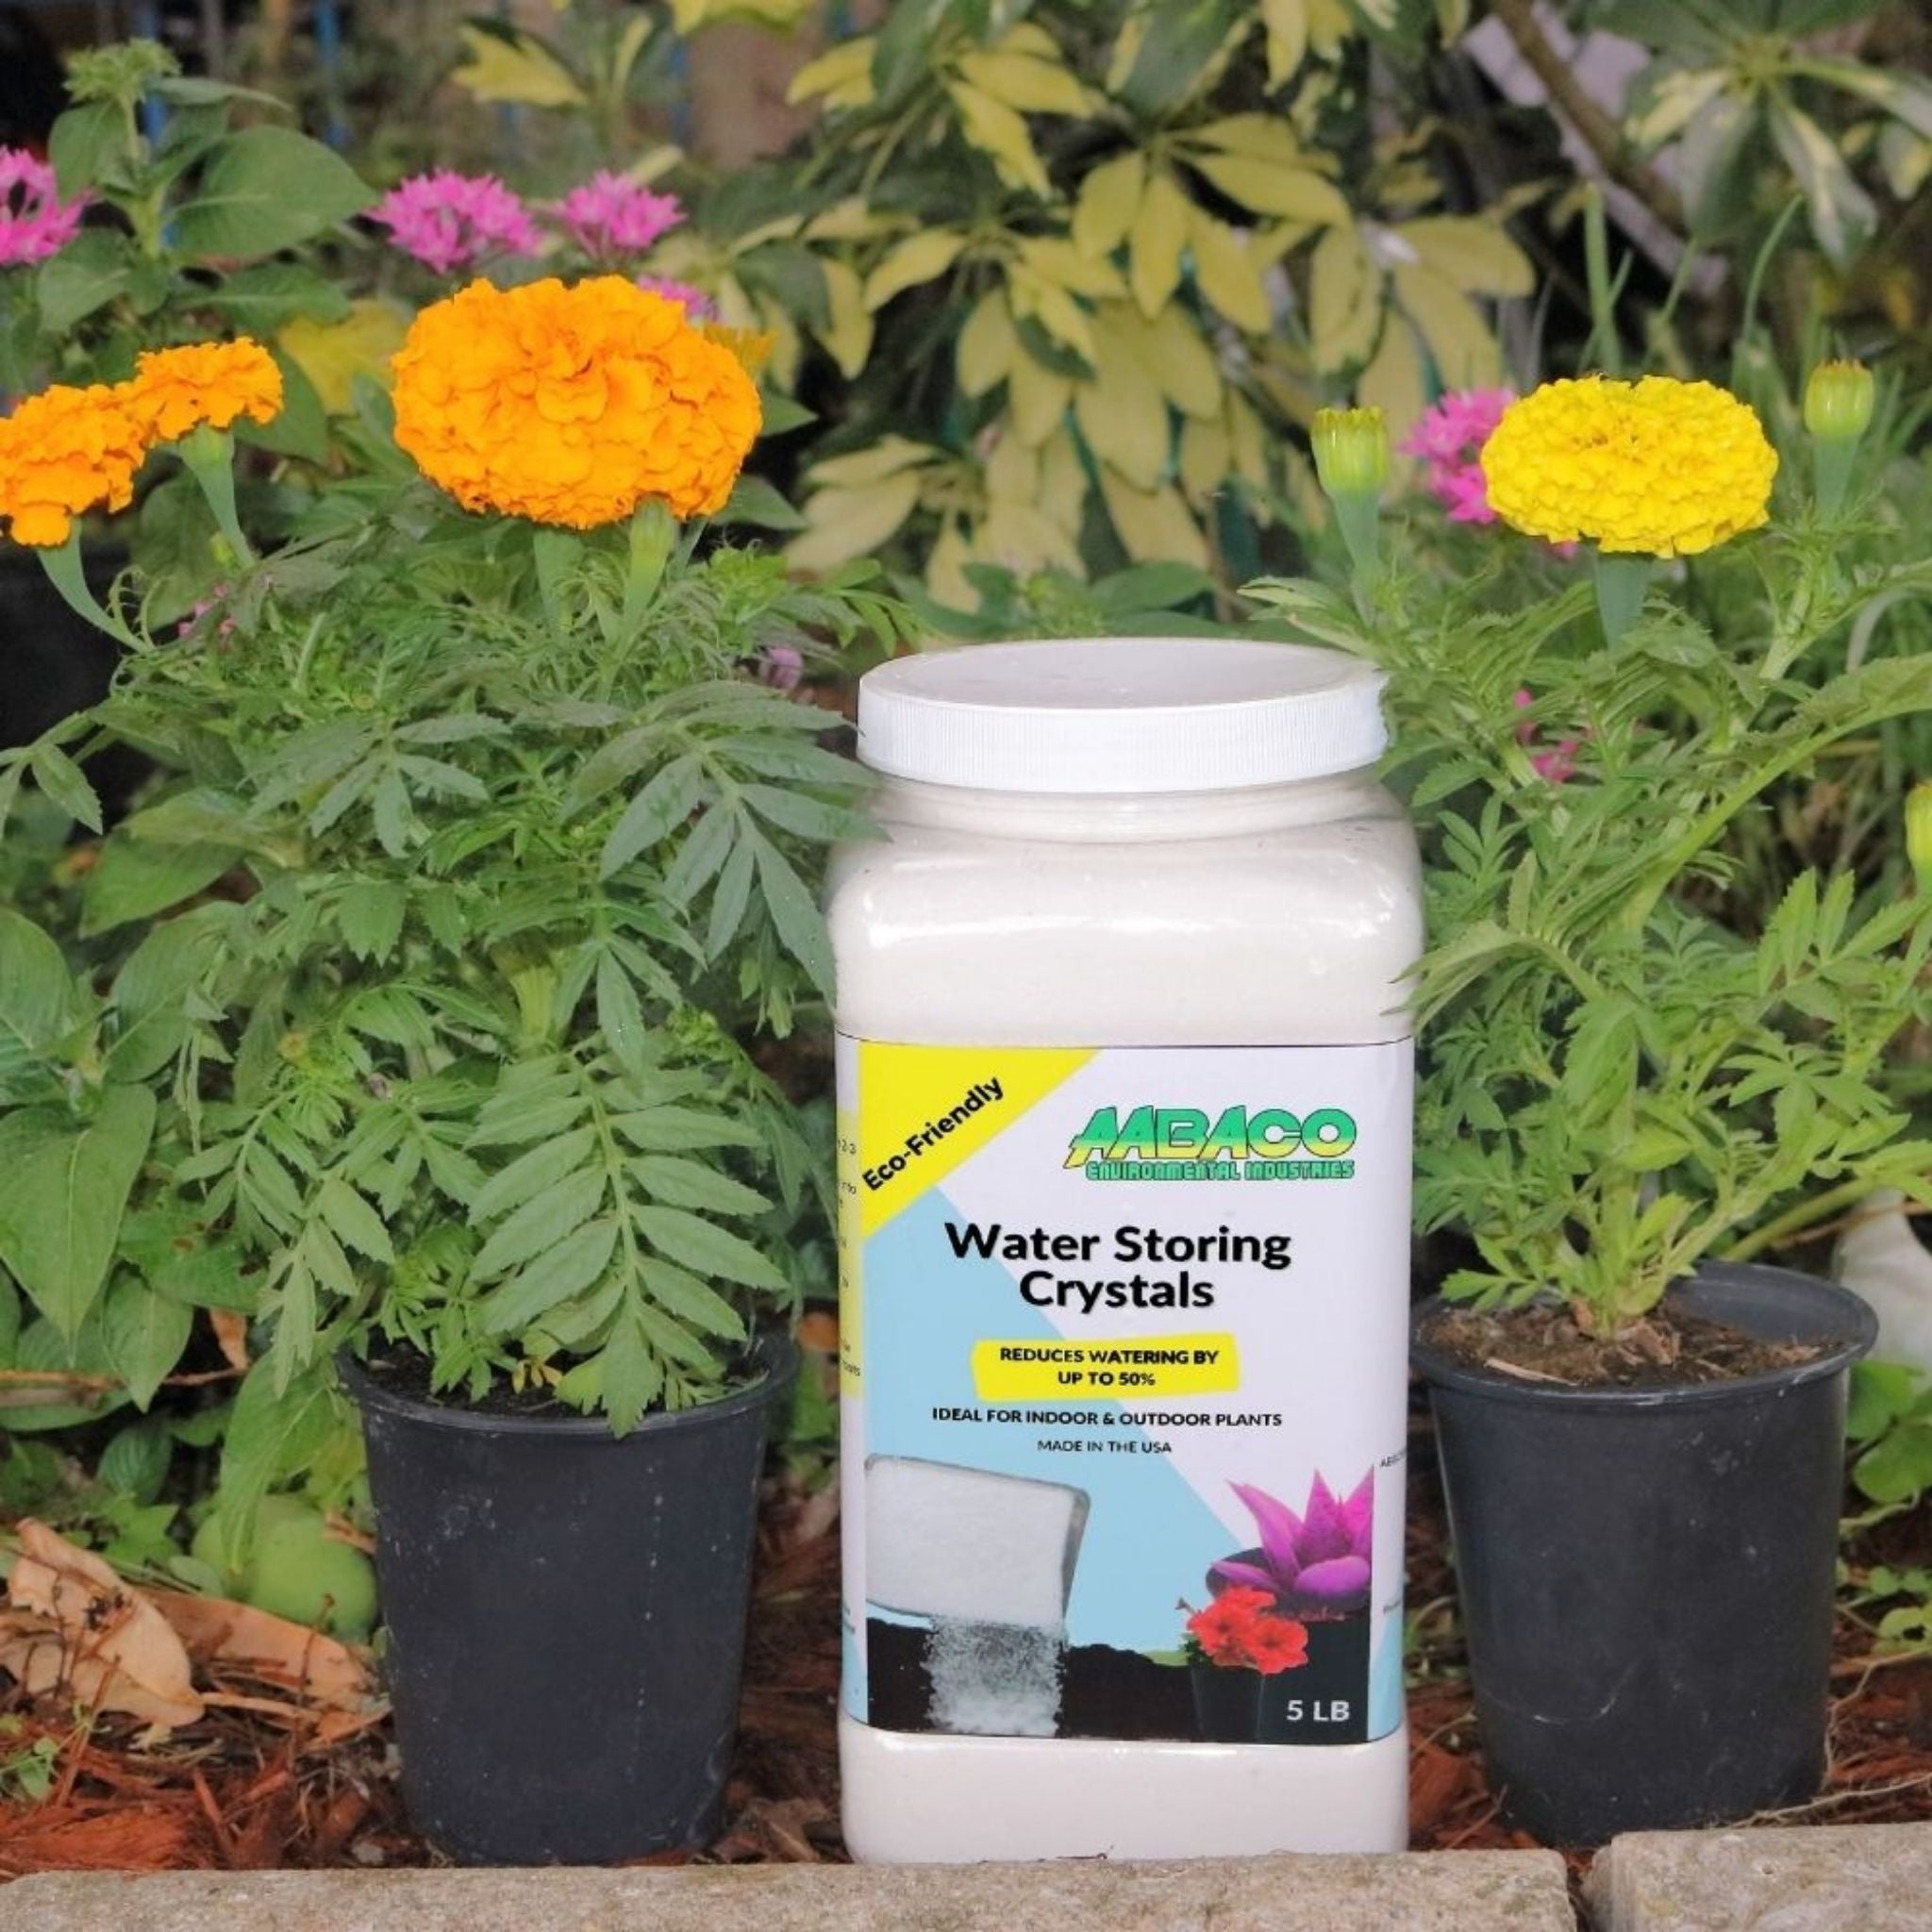 AABACO WATER STORING CRYSTALS - For Indoor & Outdoor Plants